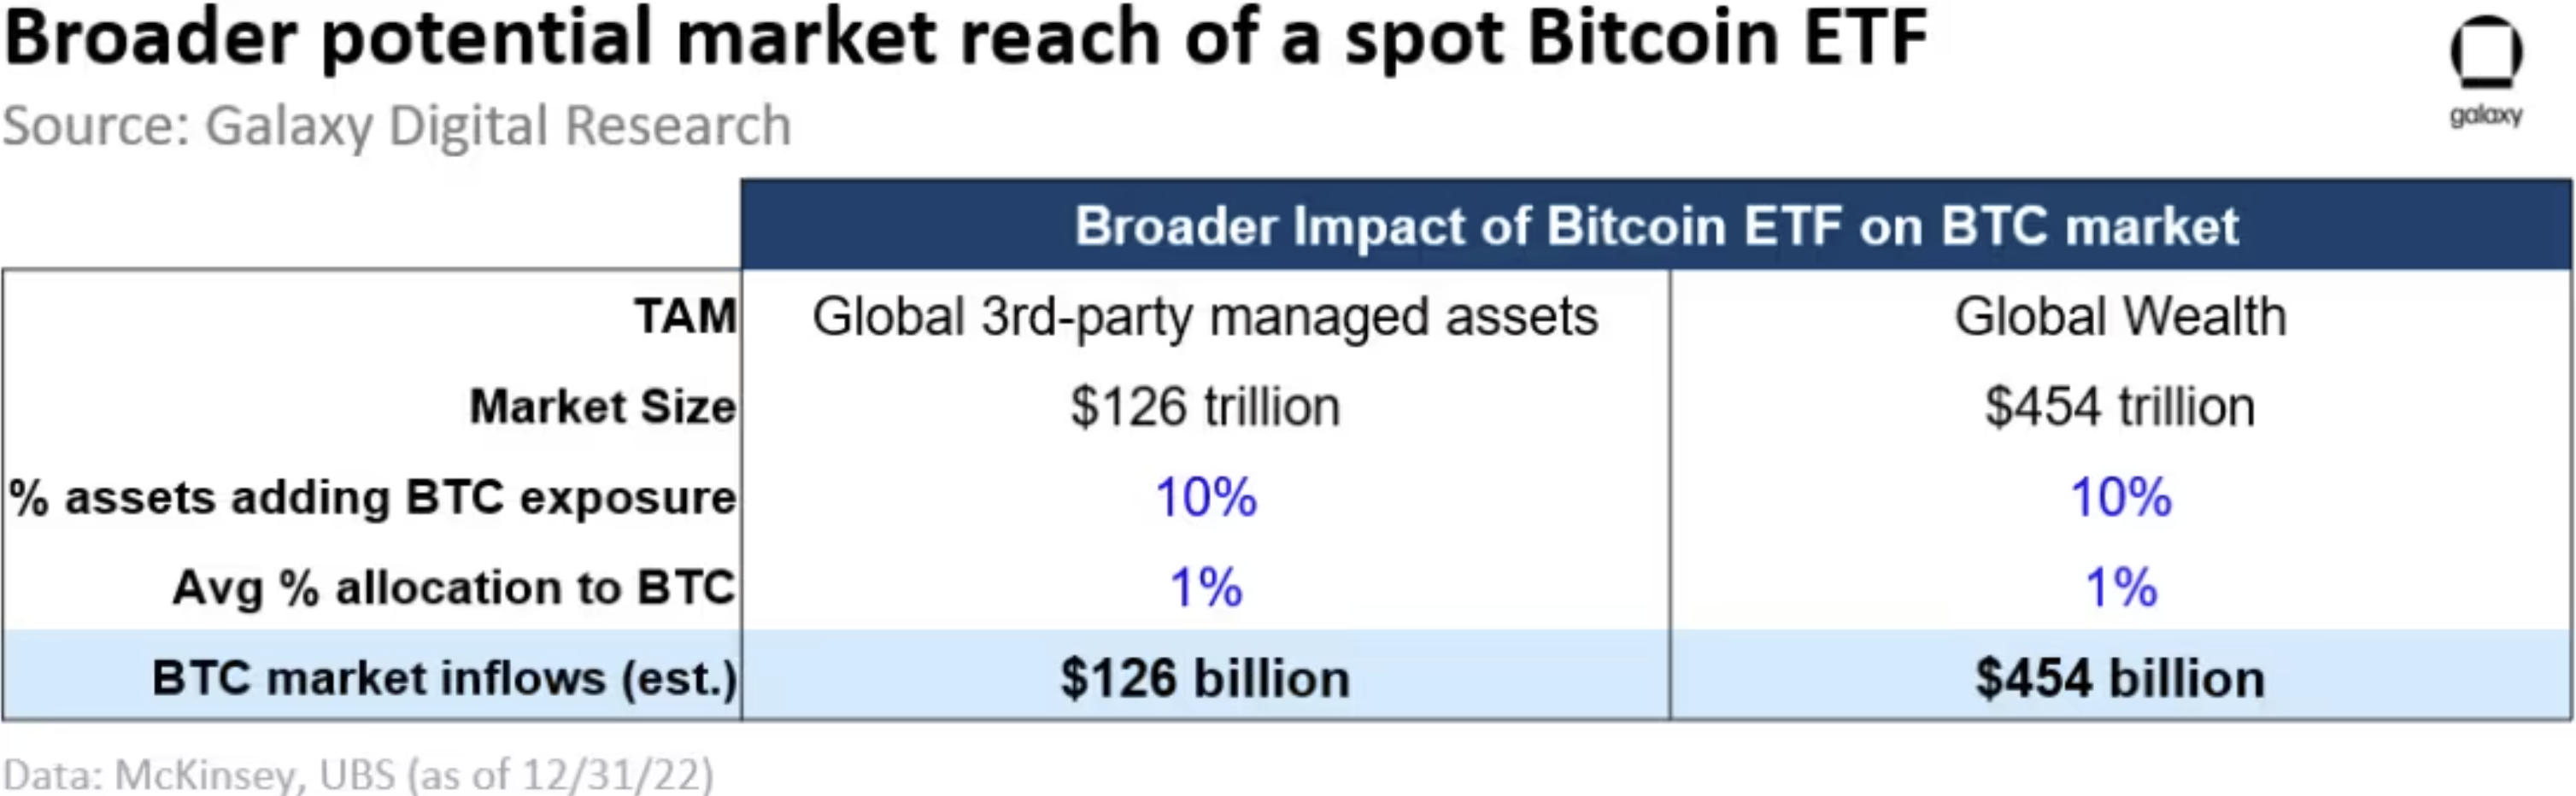 Broader potential market reach of Bitcoin